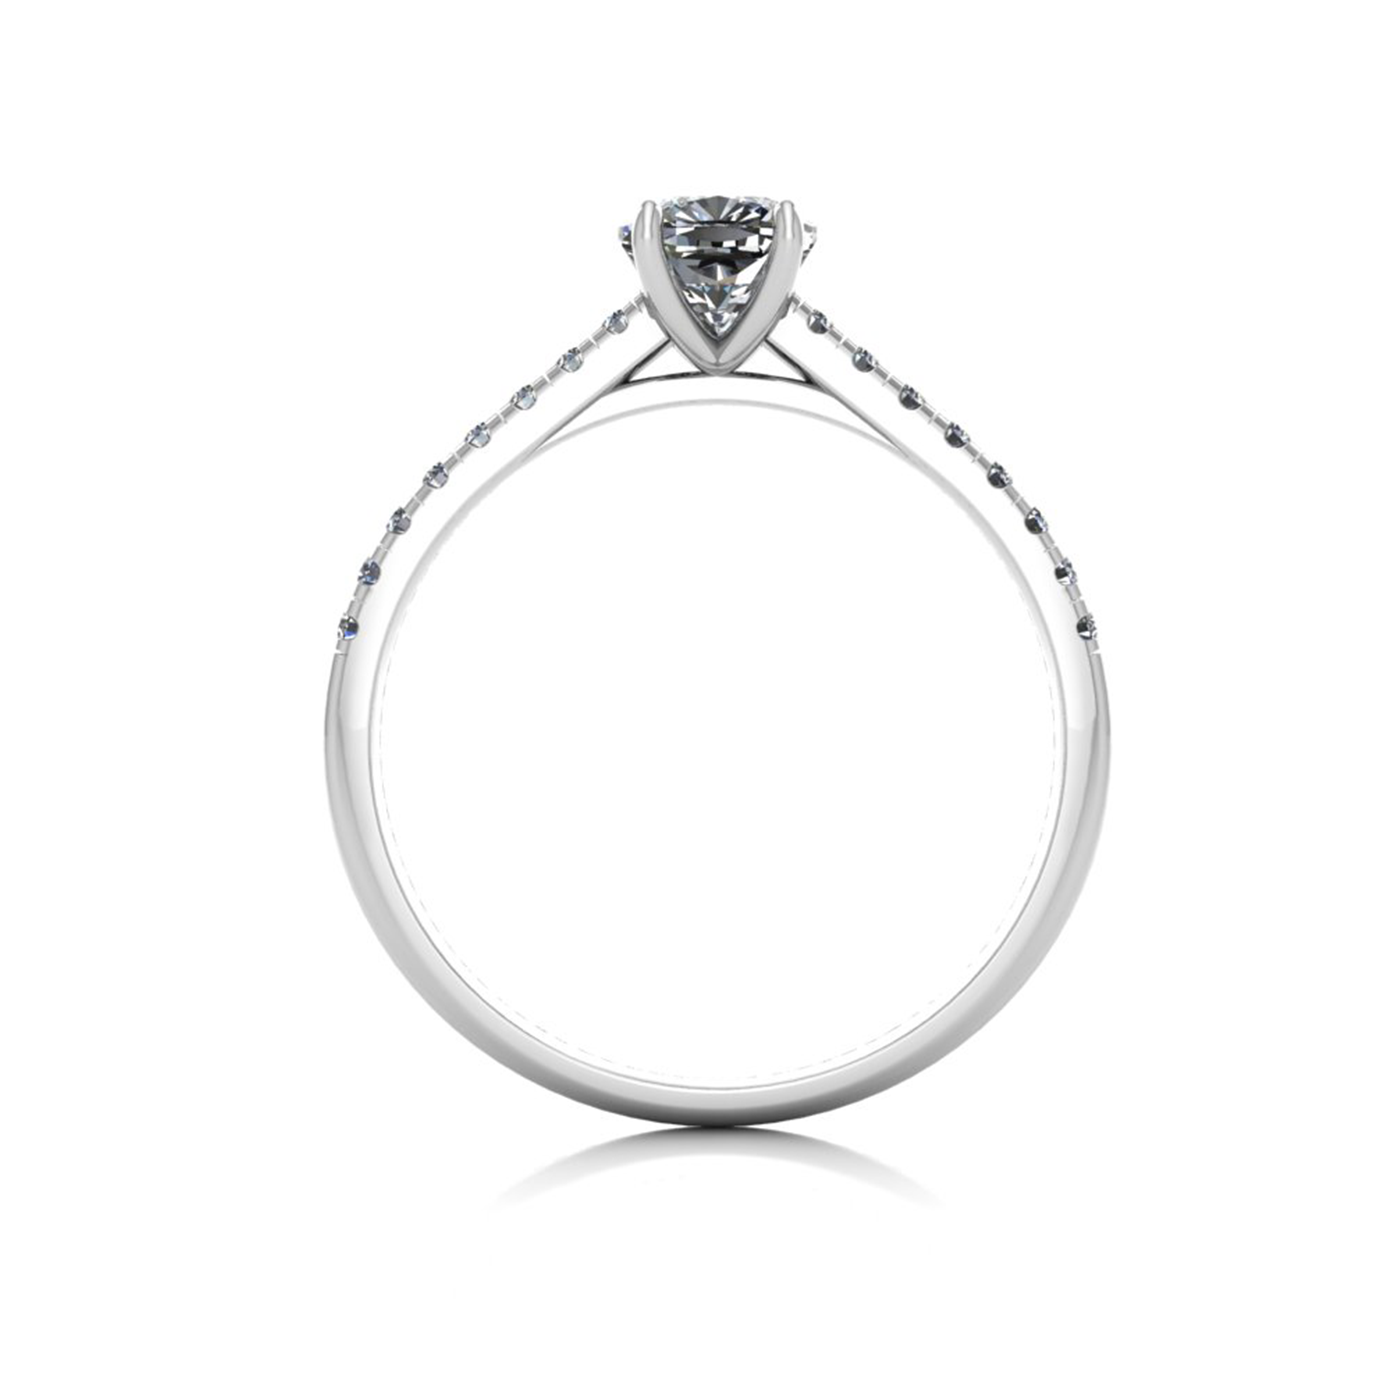 18k white gold 0,80 ct 4 prongs cushion cut diamond engagement ring with whisper thin pavÉ set band